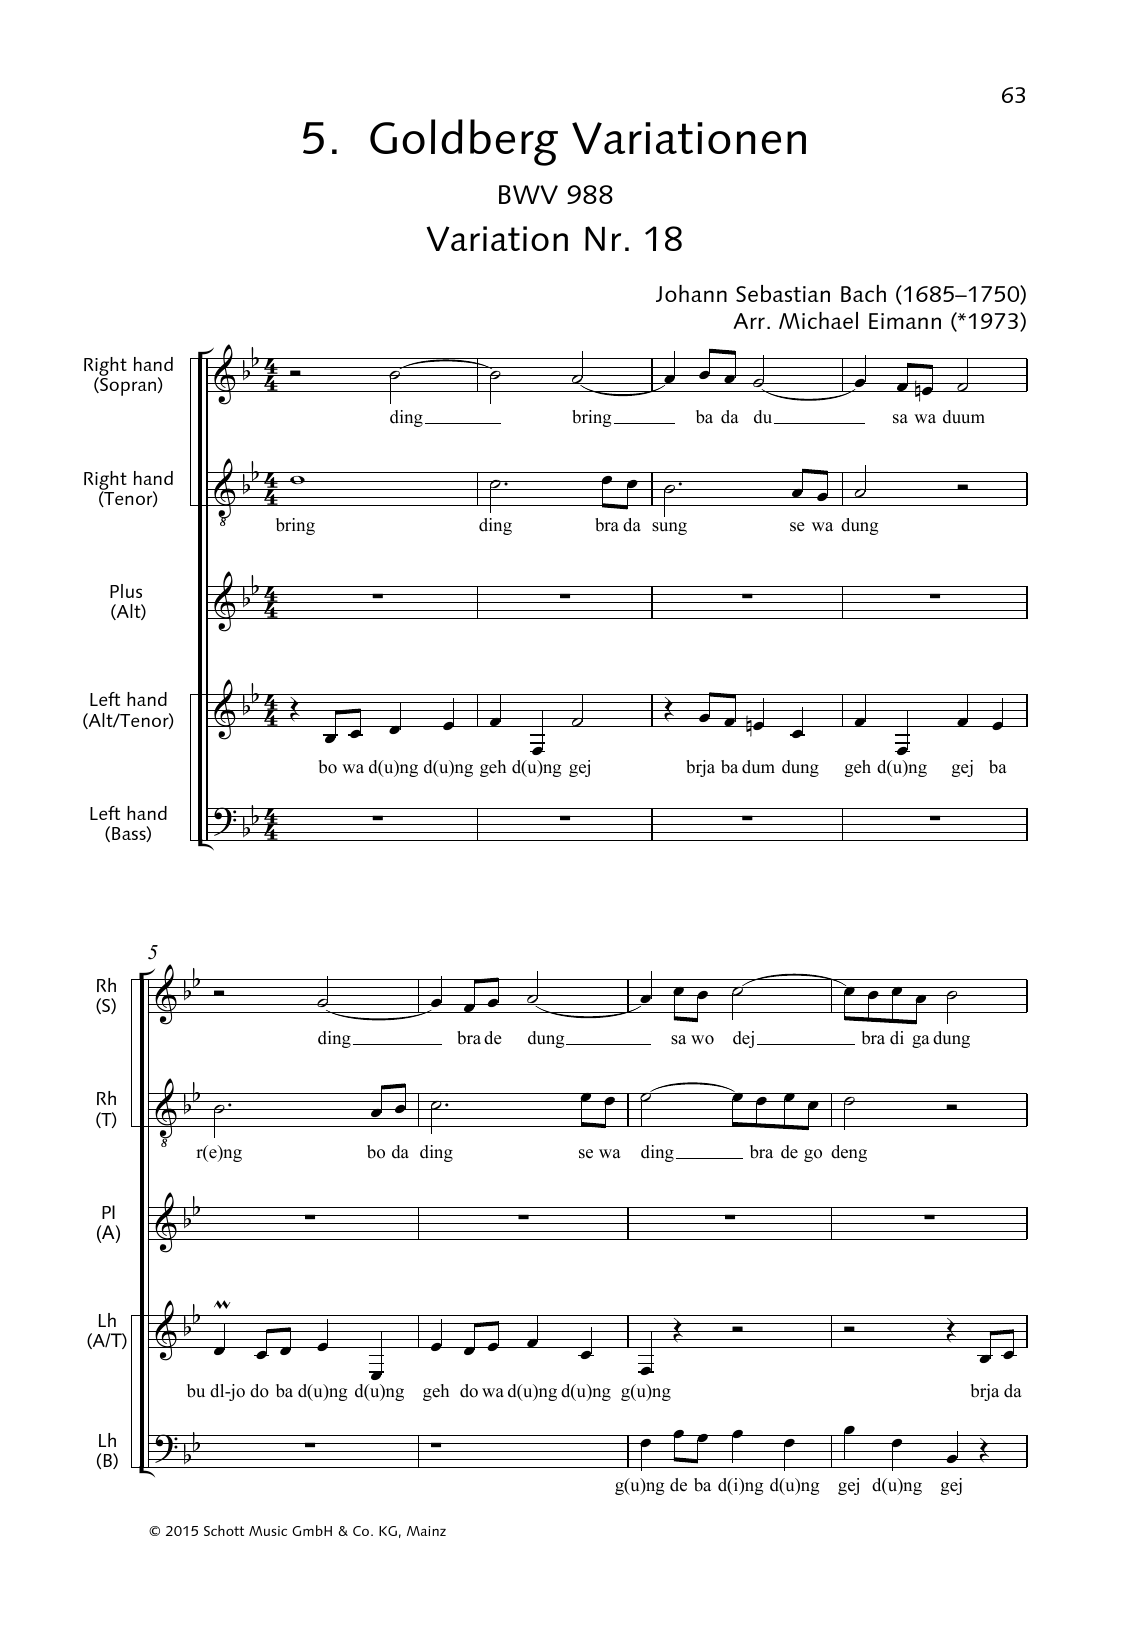 Johann Sebastian Bach Goldberg Variations, Variation No. 18 sheet music notes and chords arranged for Choir